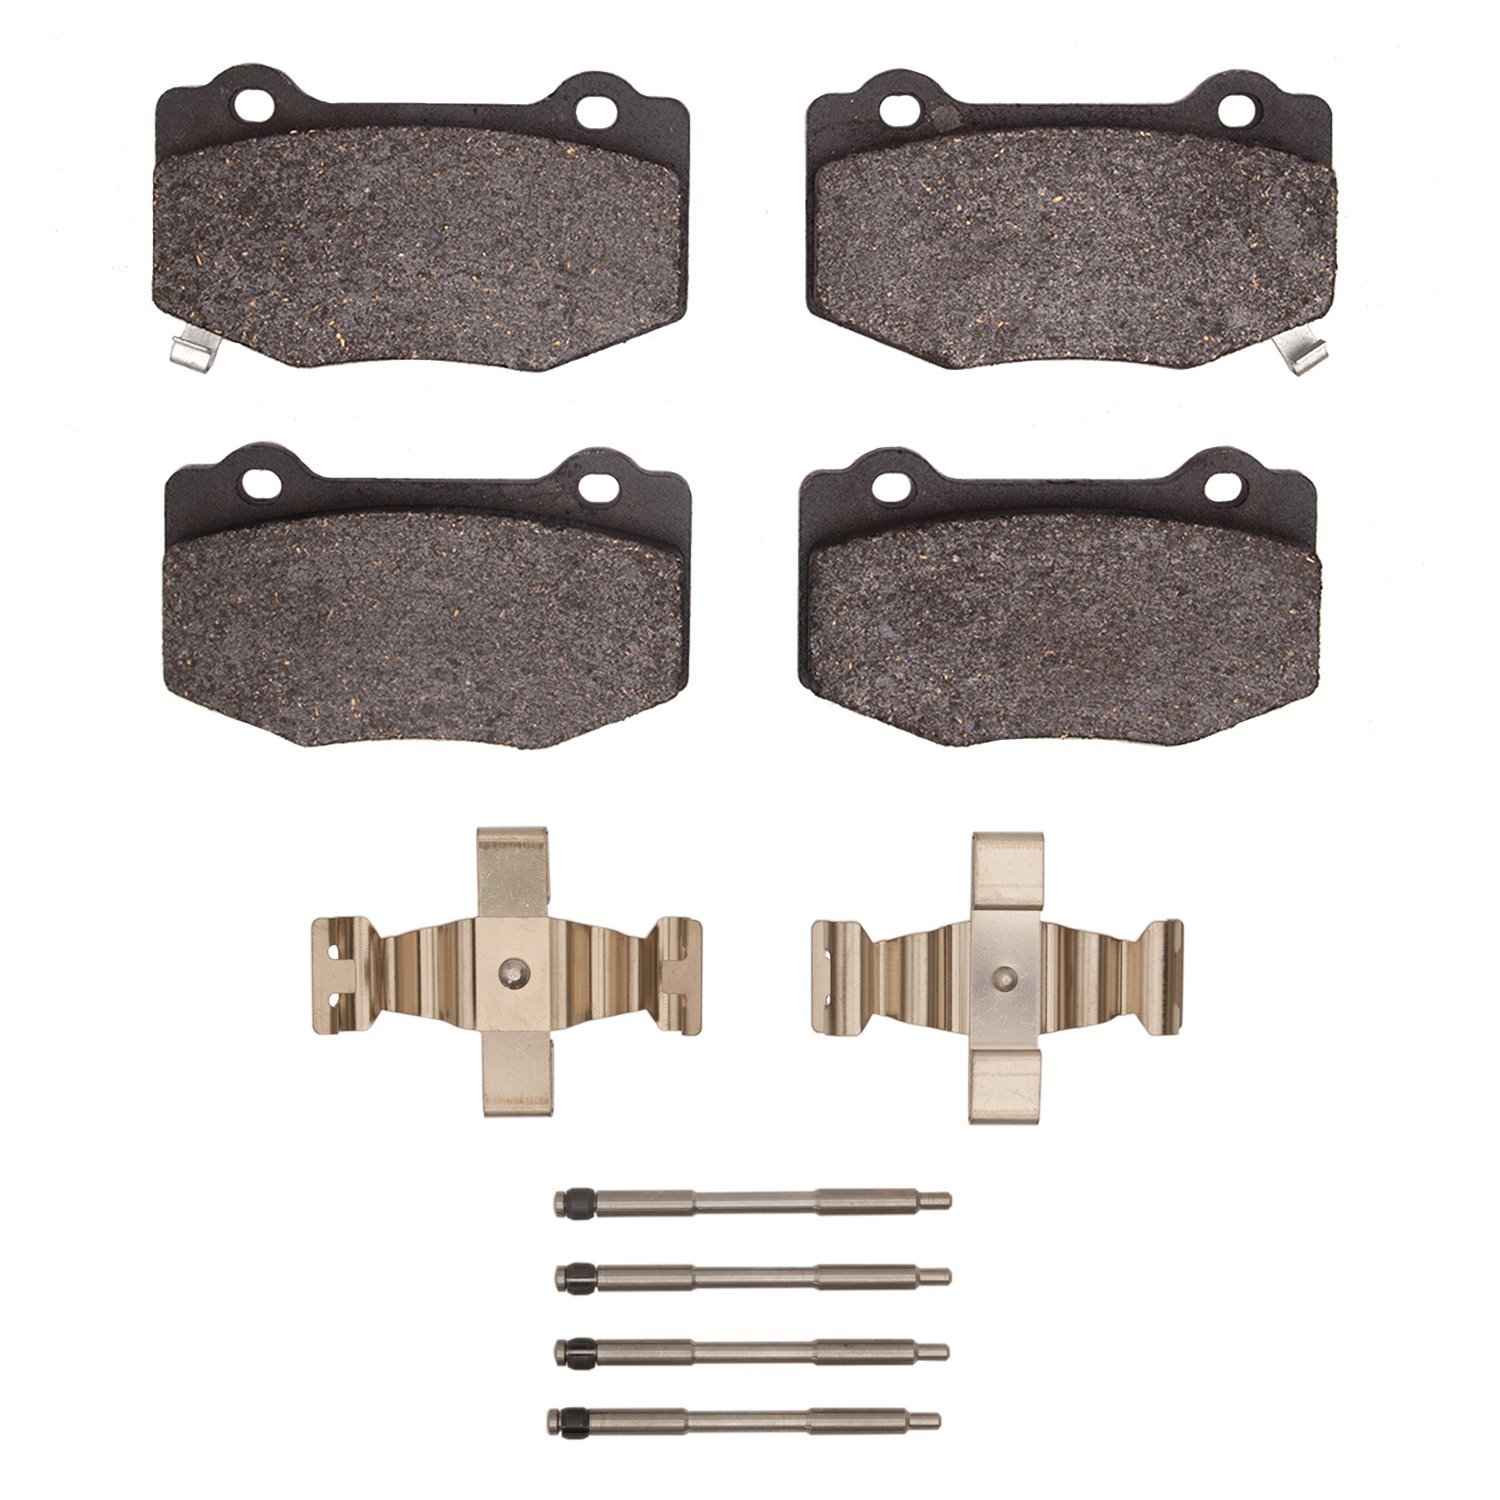 1600-1718-01 5000 Euro Ceramic Brake Pads & Hardware Kit, Fits Select GM, Position: Rear